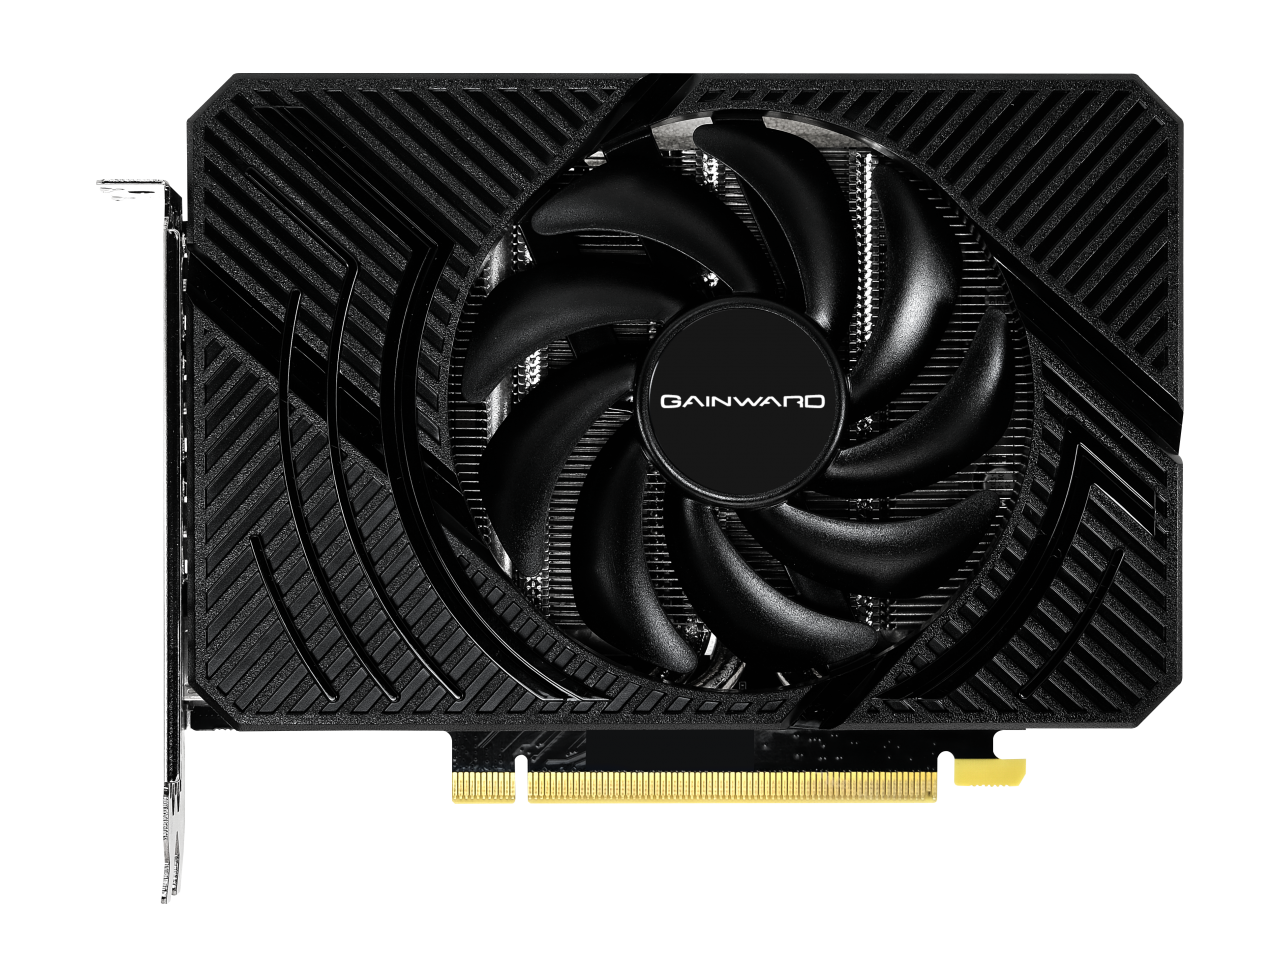 Products :: GeForce RTX™ 4060 Ti Pegasus OC 8GB